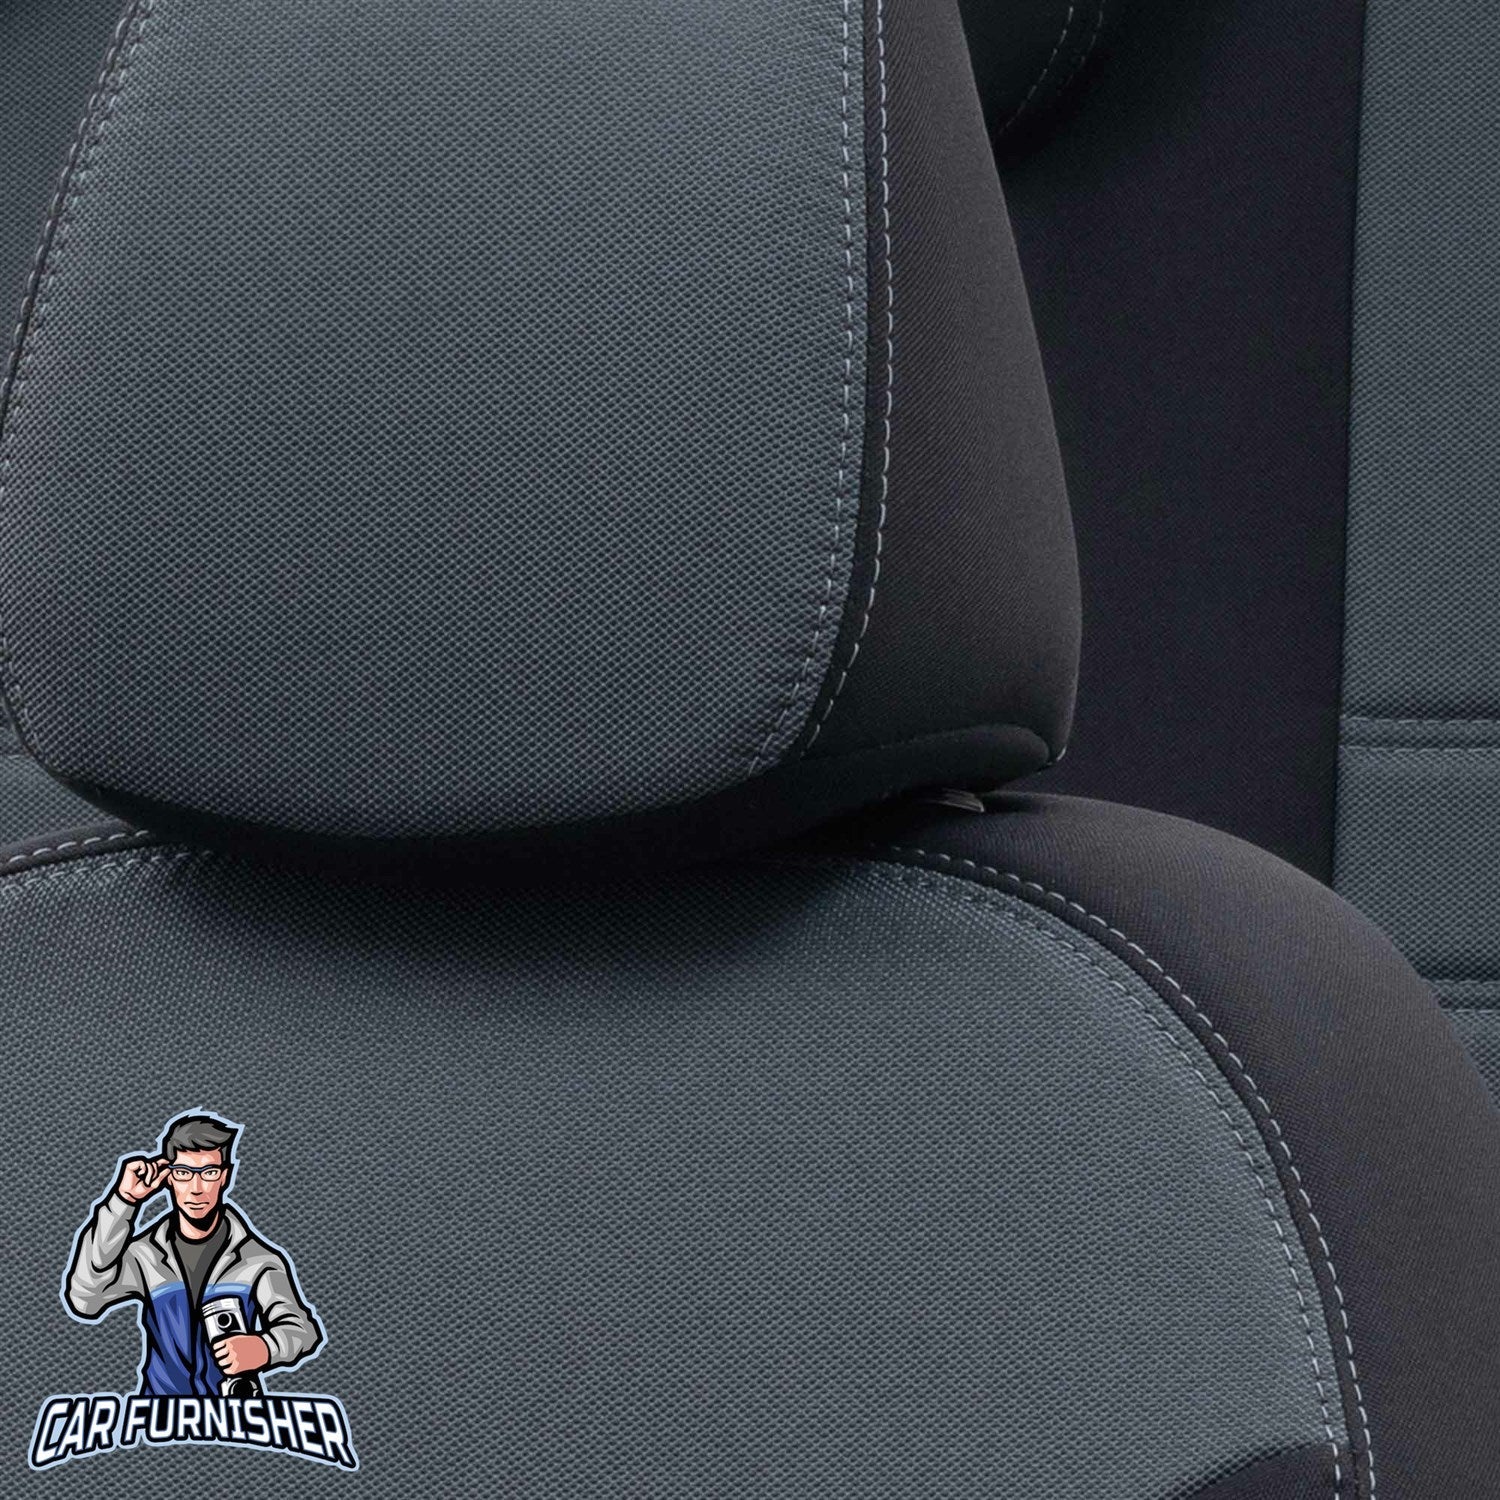 Bmw 1 Series Seat Cover Original Jacquard Design Smoked Black Jacquard Fabric